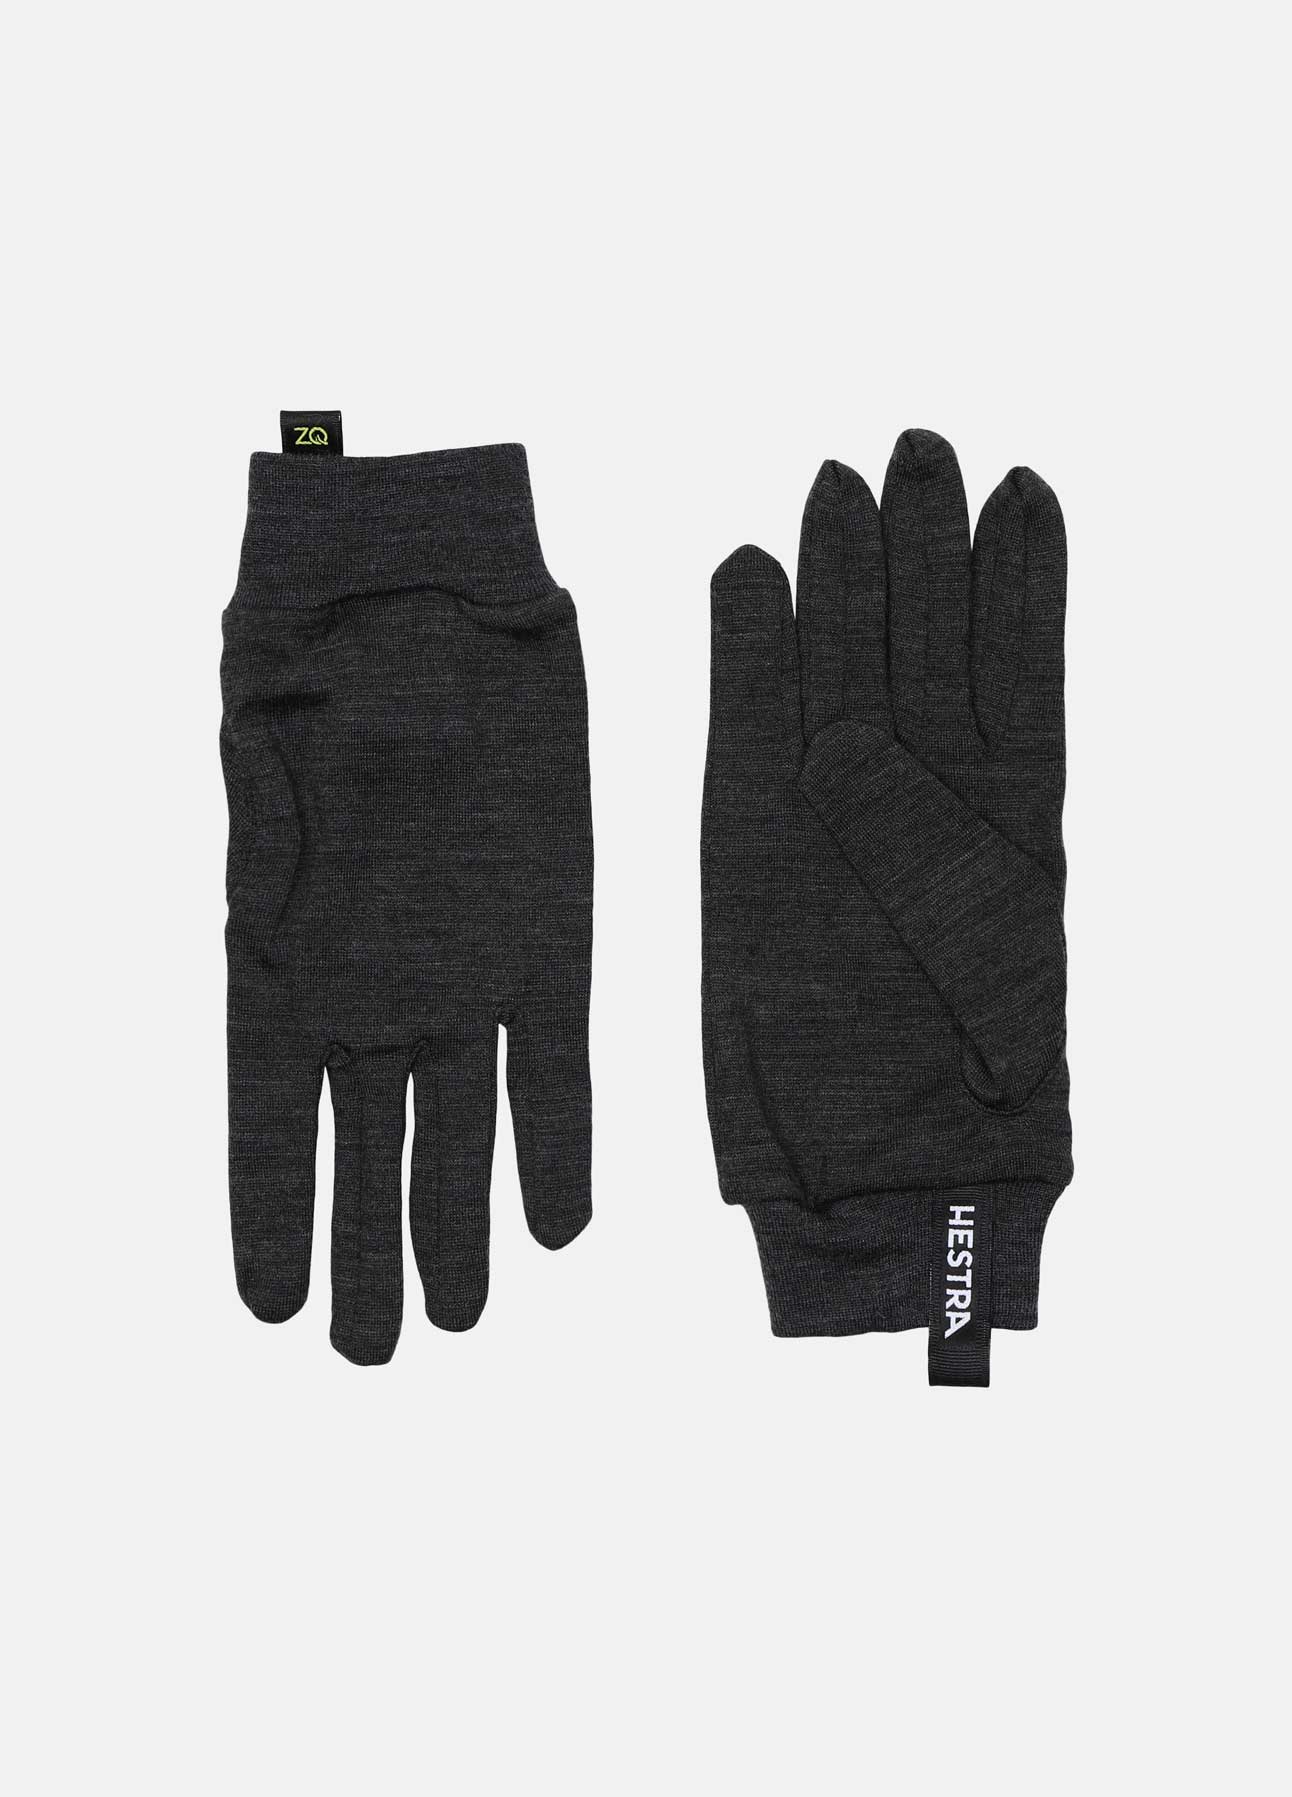 Koks grå wool liner active handsker fra Hestra